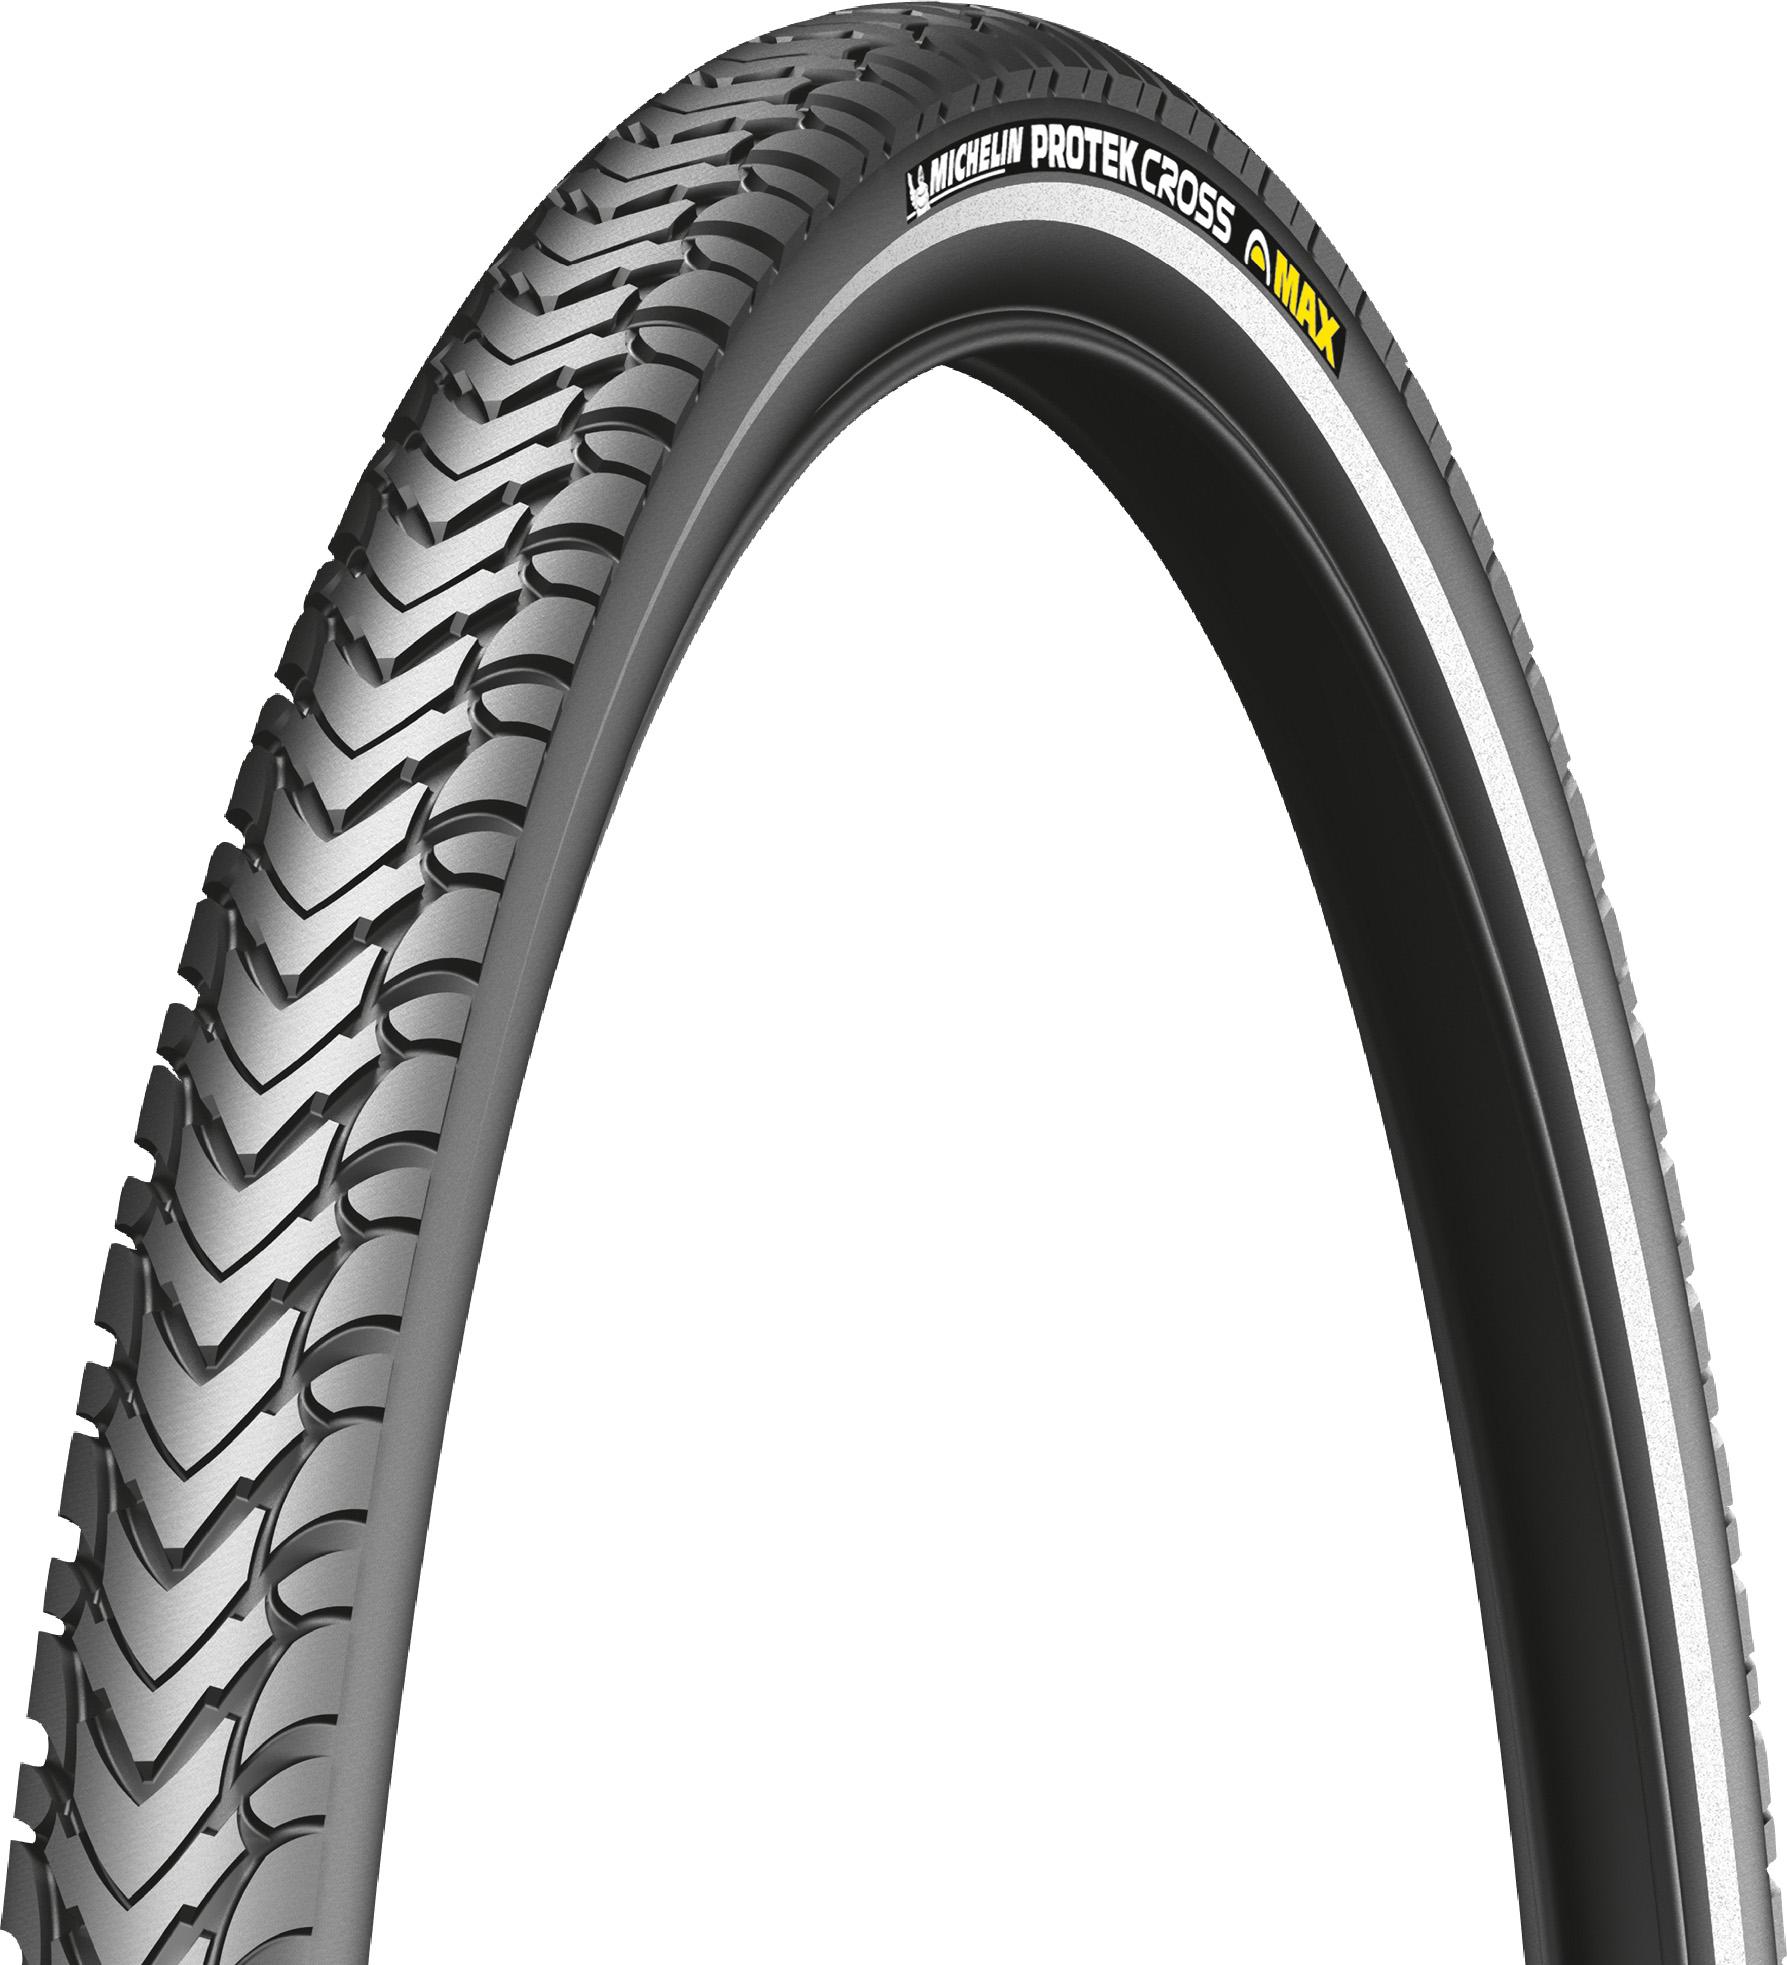 Michelin Protek Cross Max Touring Tyre - Black/reflex